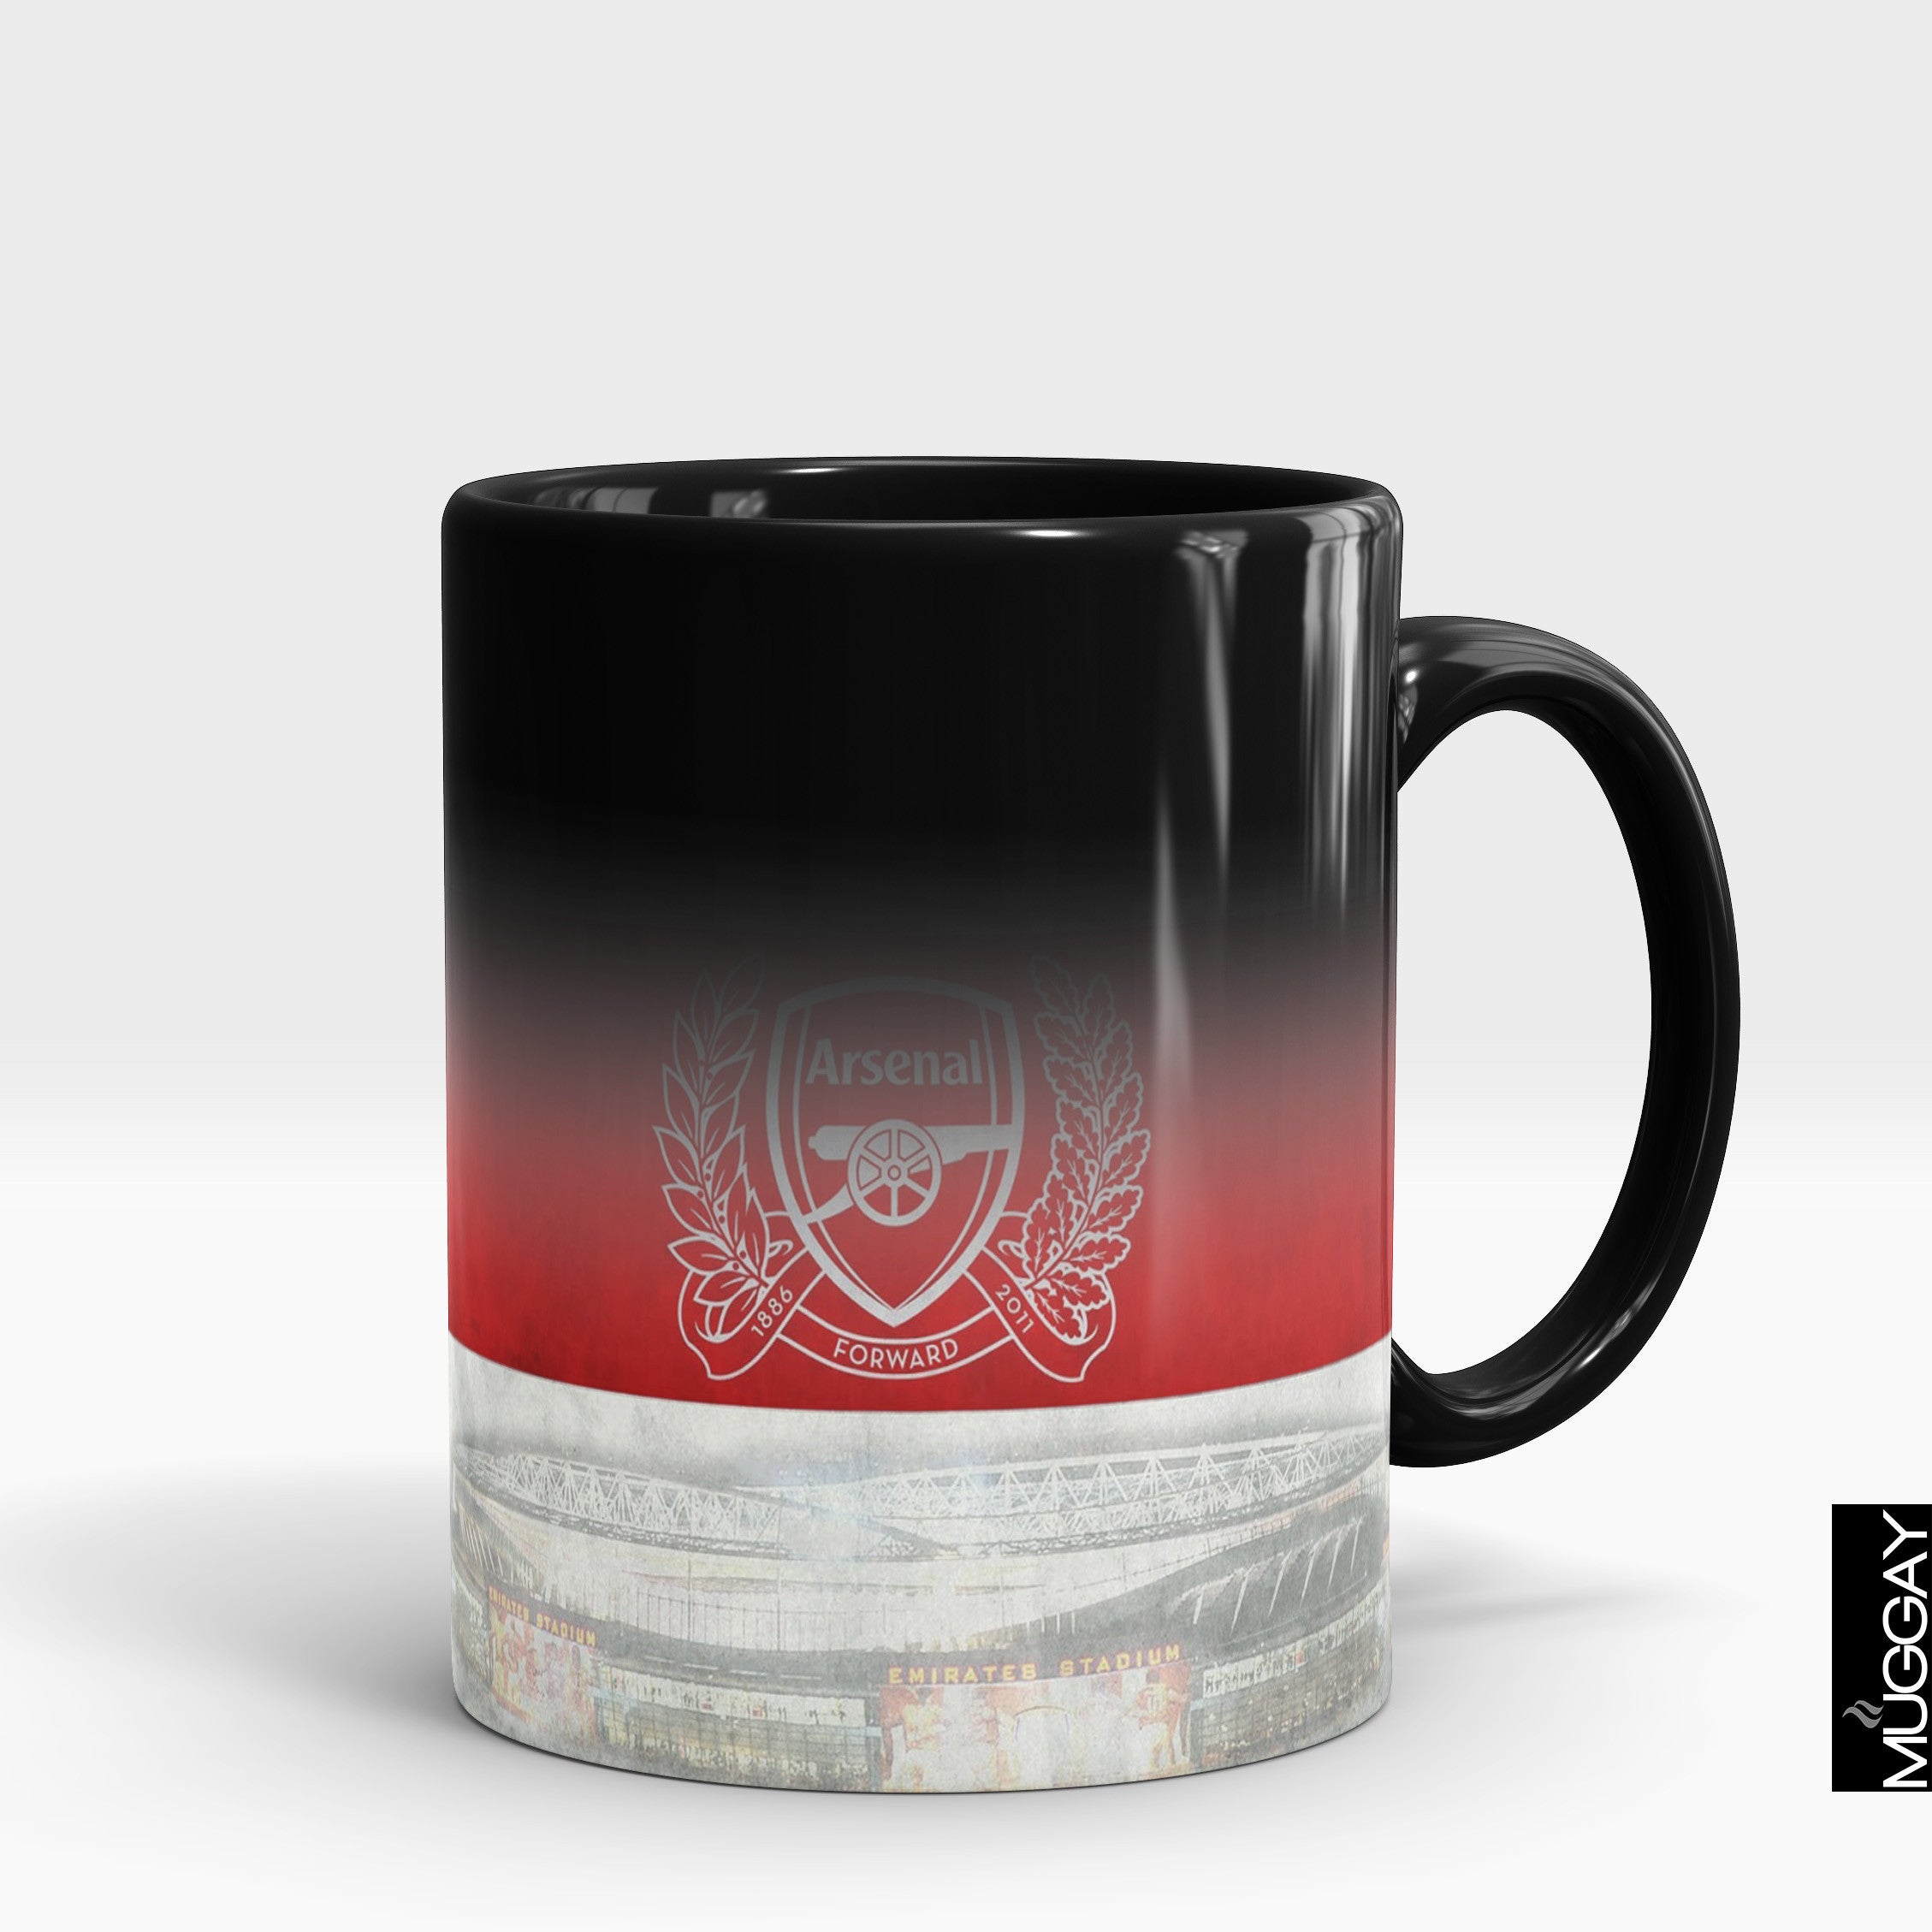 Football Theme mugs33